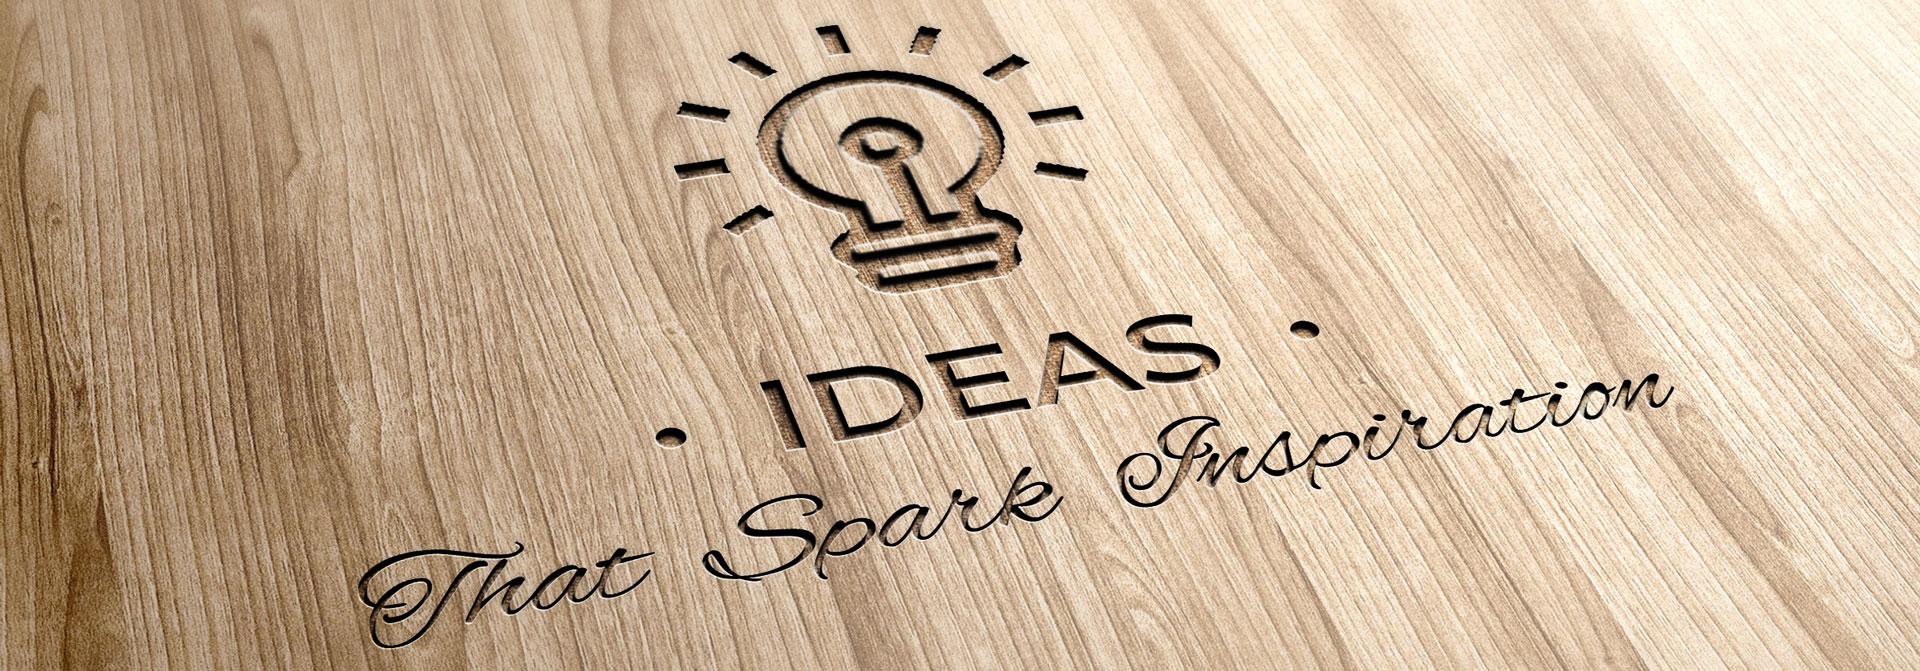 laser engraved ideas that spark inspiration